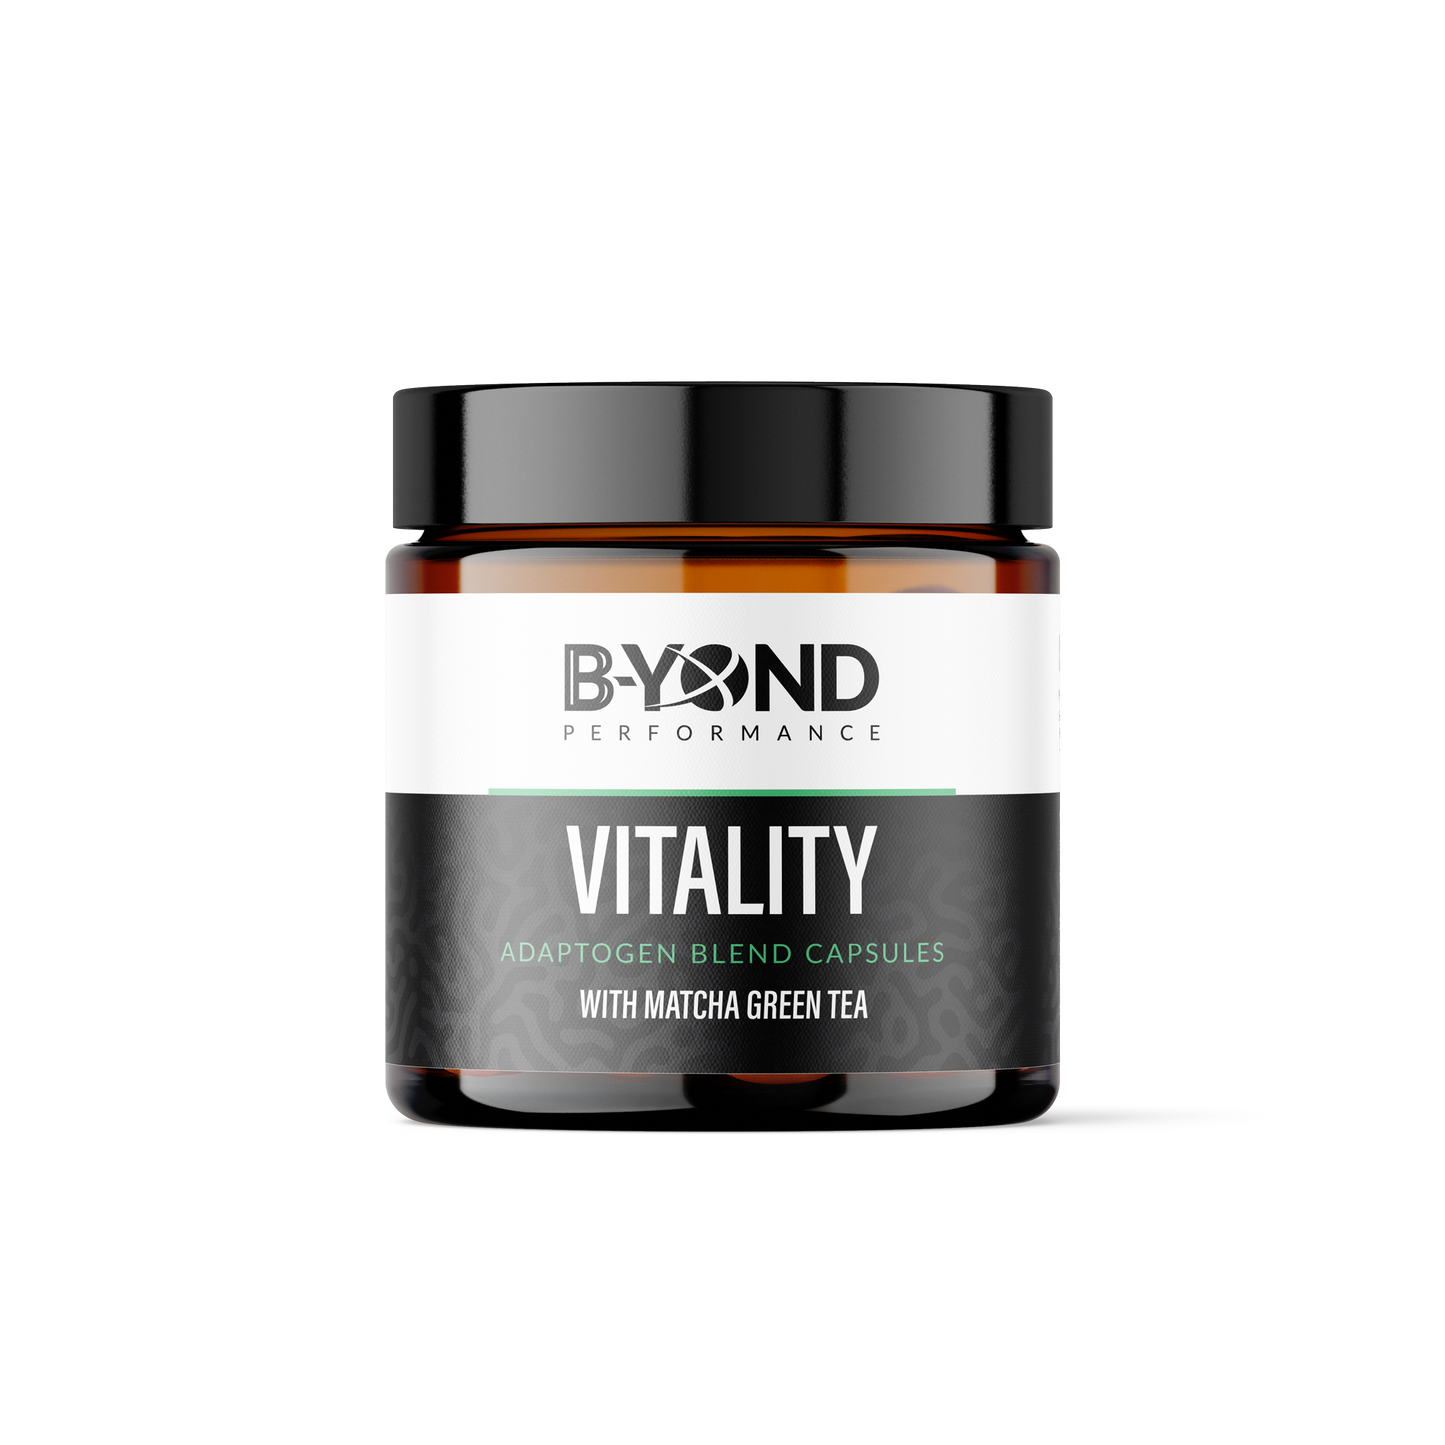 Vitality Adaptogen Blend Capsules - B-YOND Performance